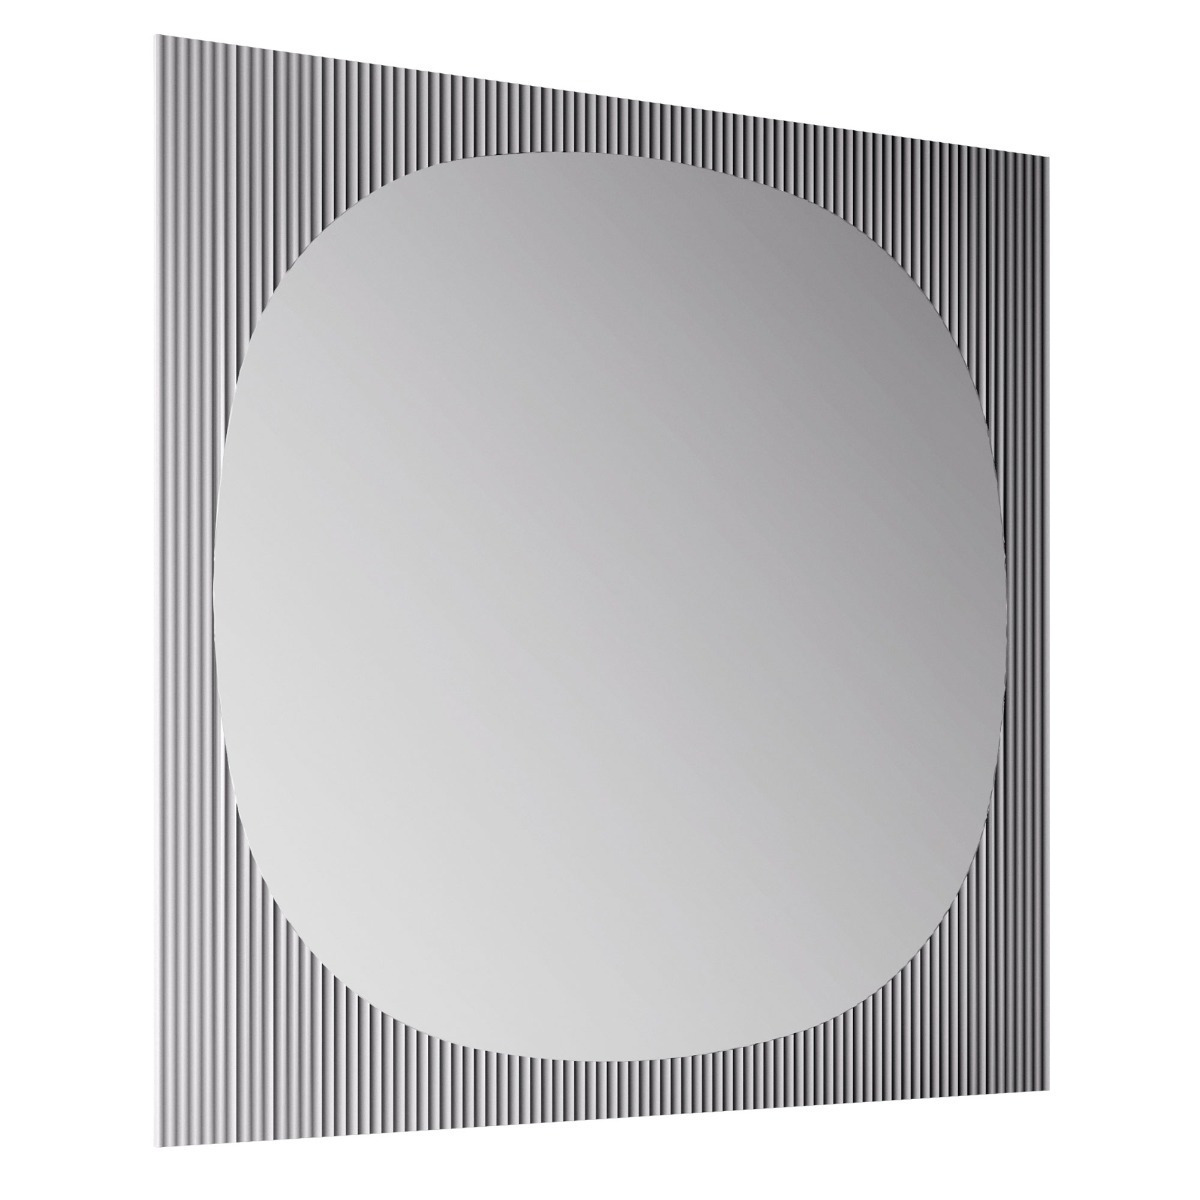 Tonelli Bands Mirror 100cm, Square, Grey Glass - Barker & Stonehouse - image 1